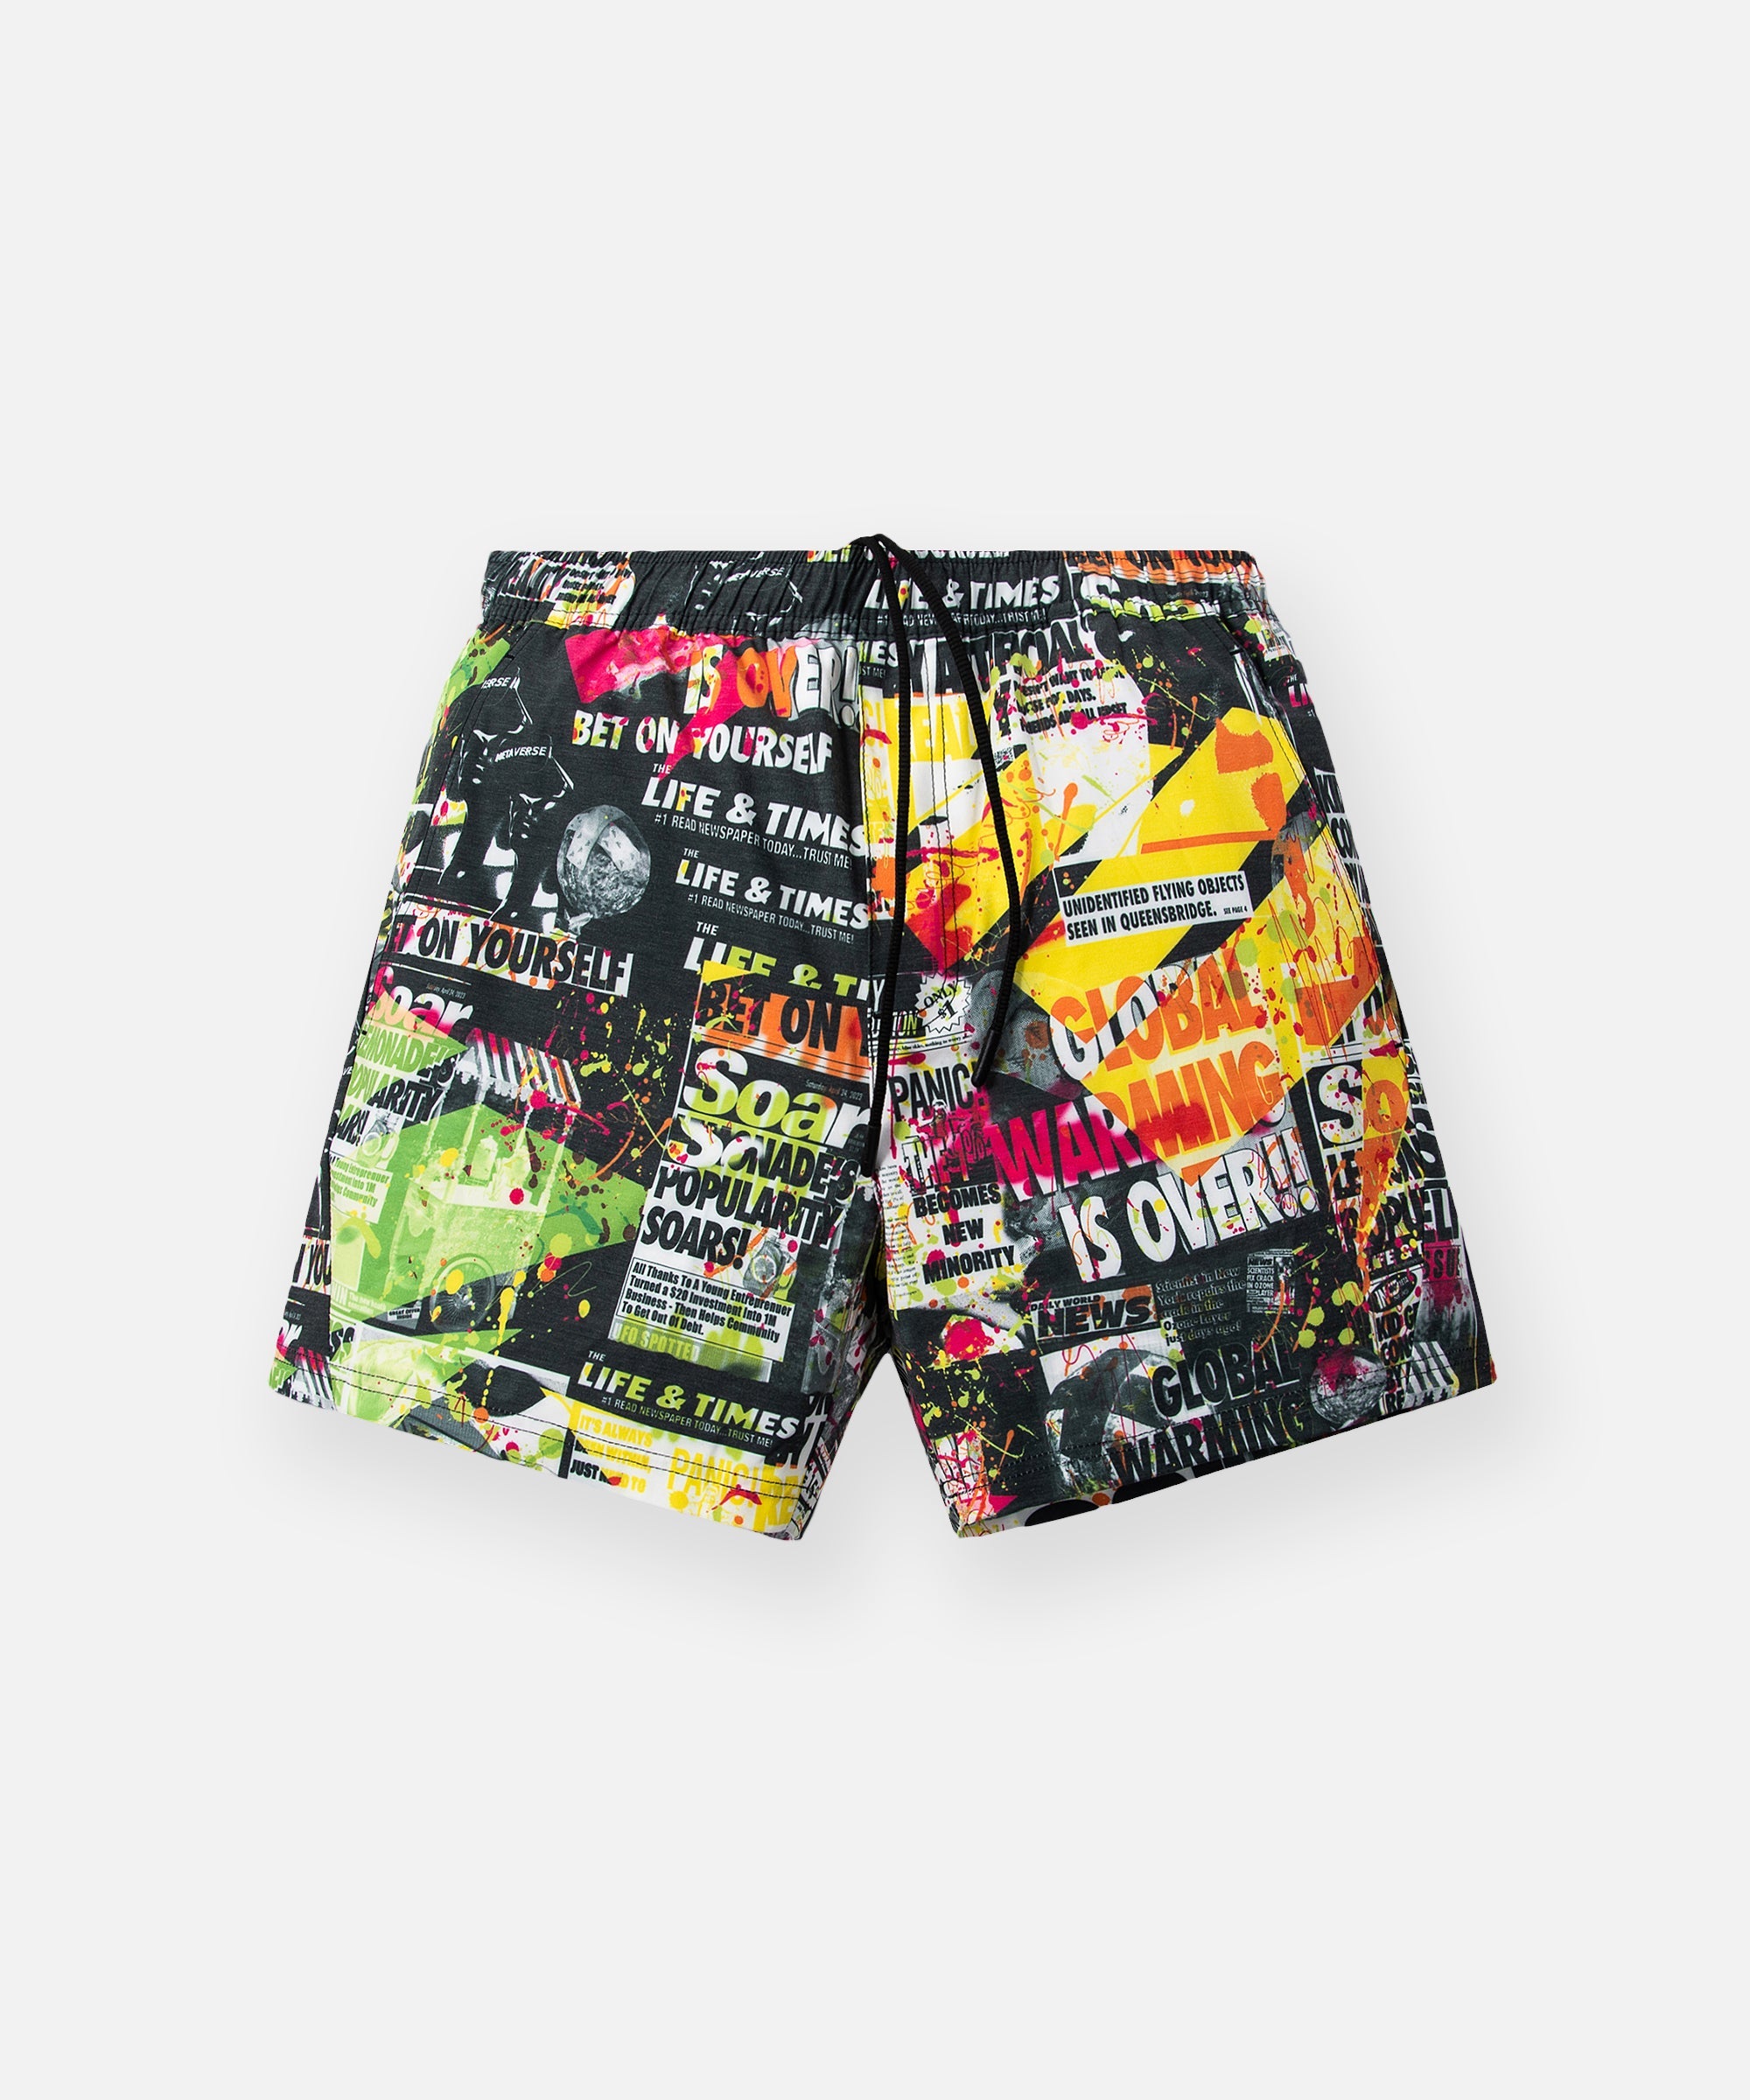 Paper Planes Shorts - Tabloid Print Shorts